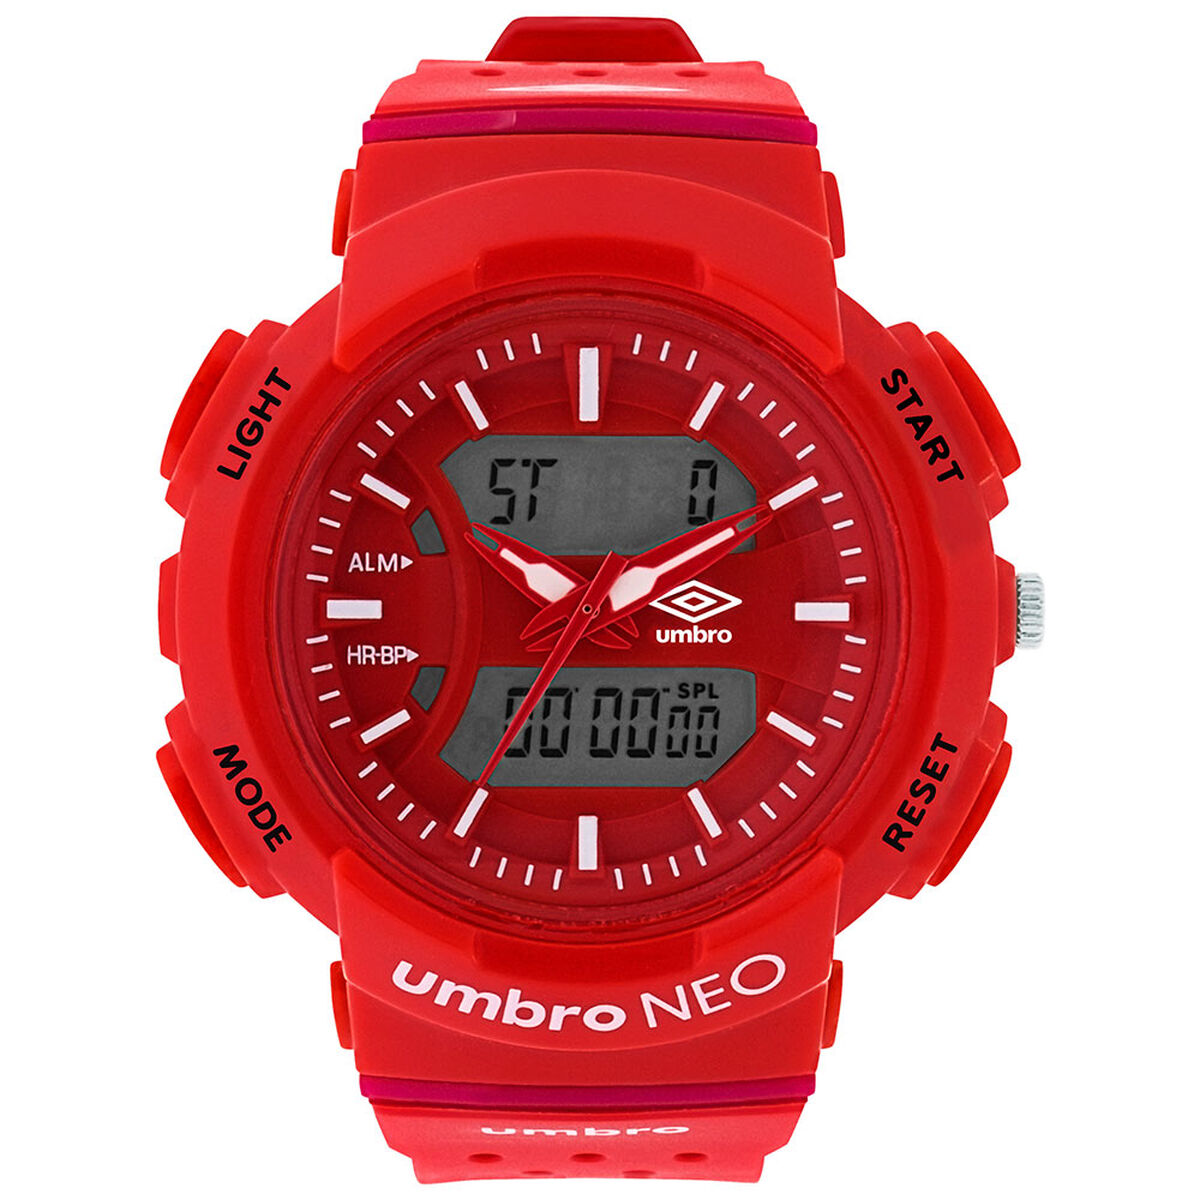 Reloj Digital Umbro UMB-070-2